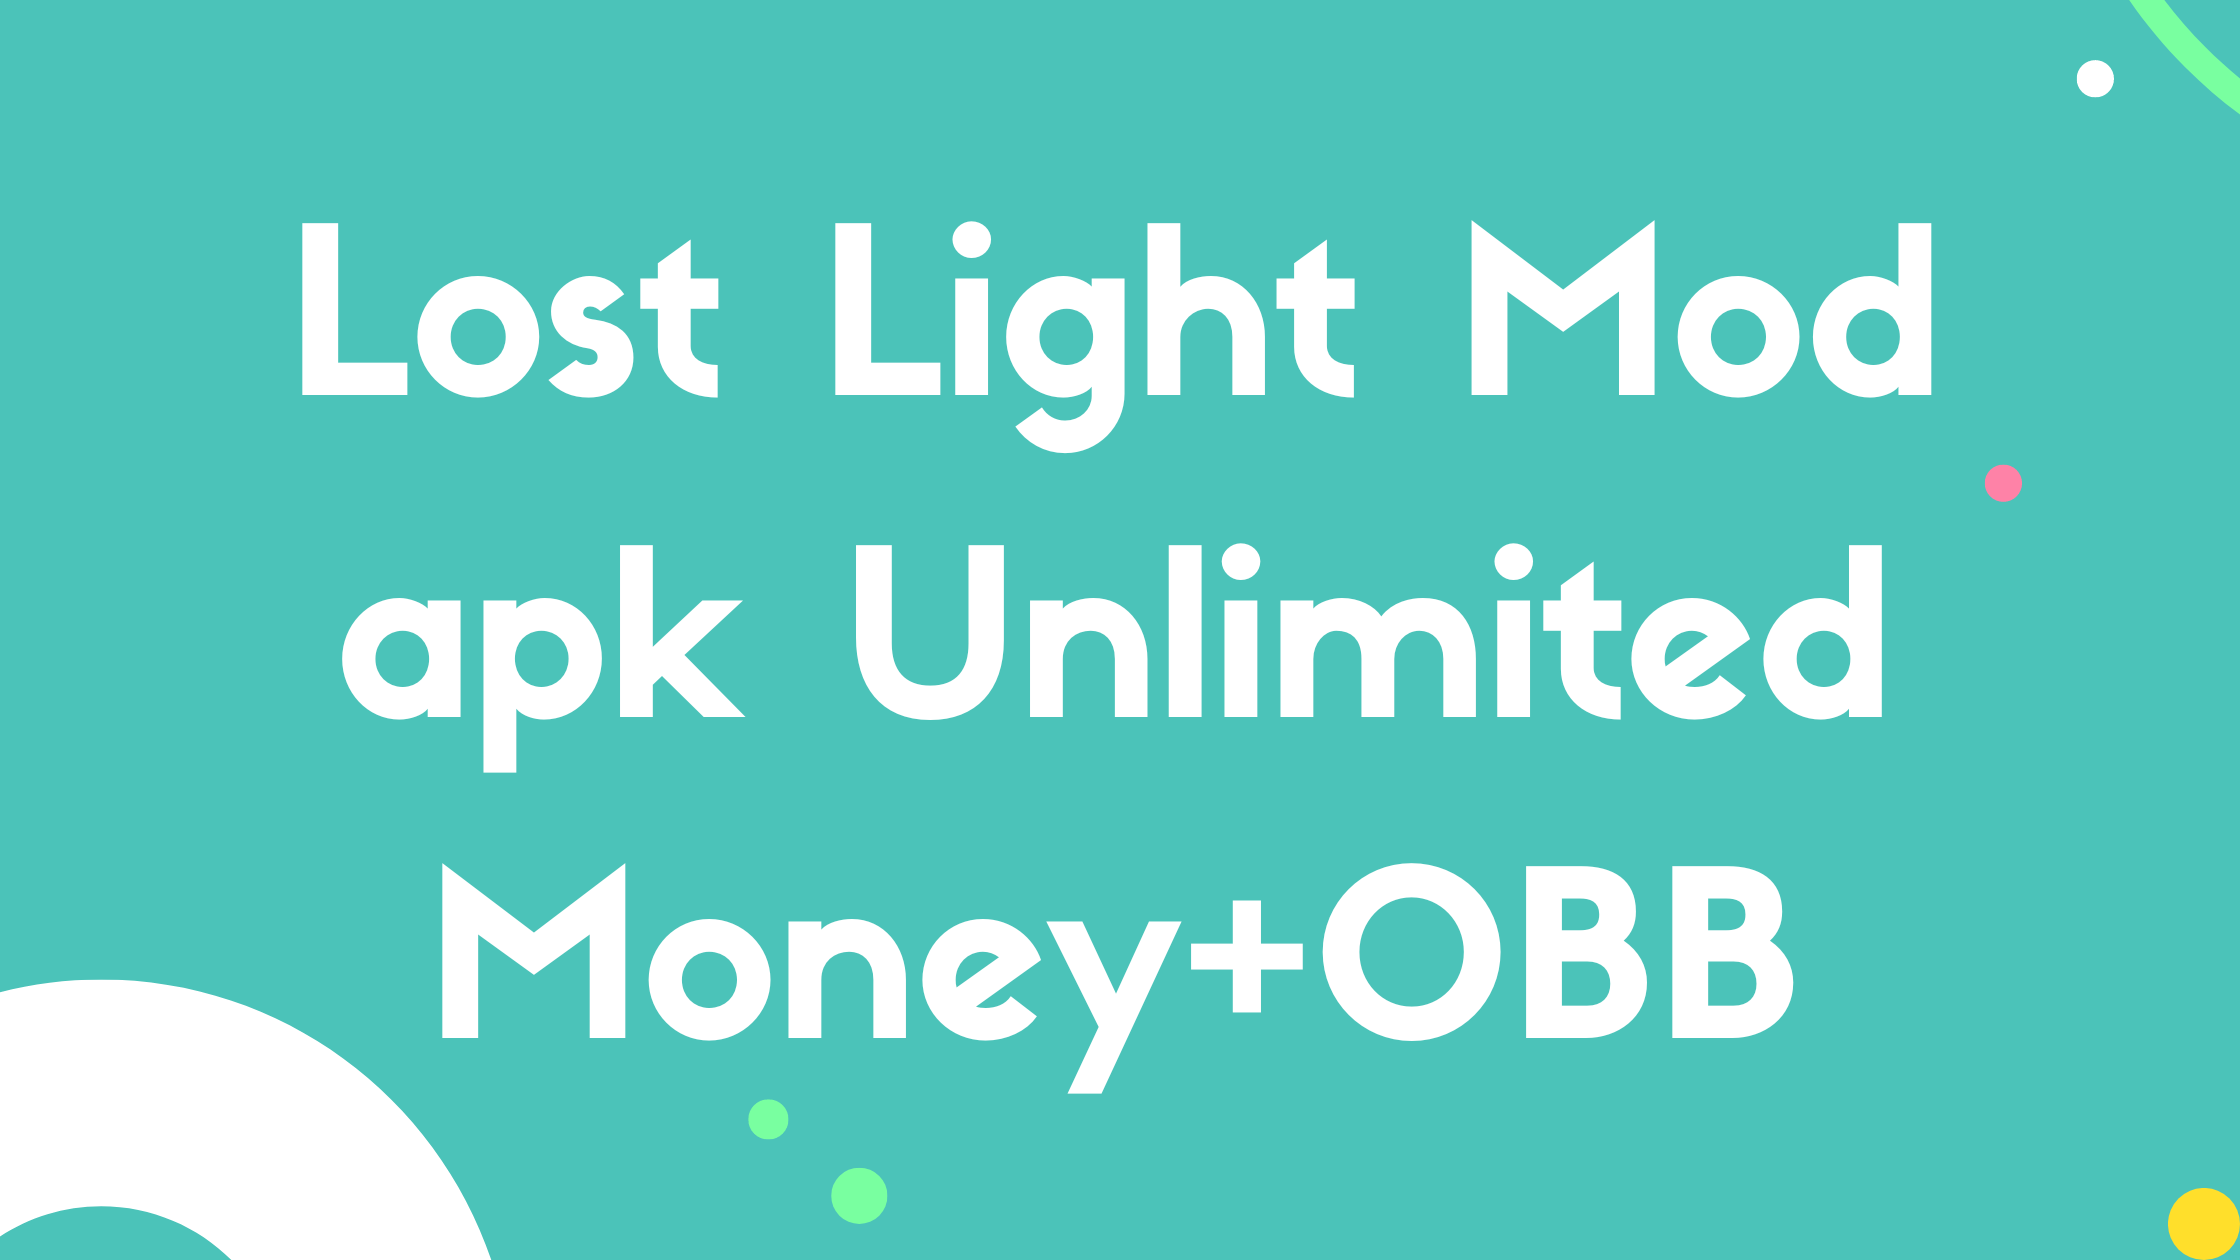 Lost Light Mod apk Unlimited Money+OBB